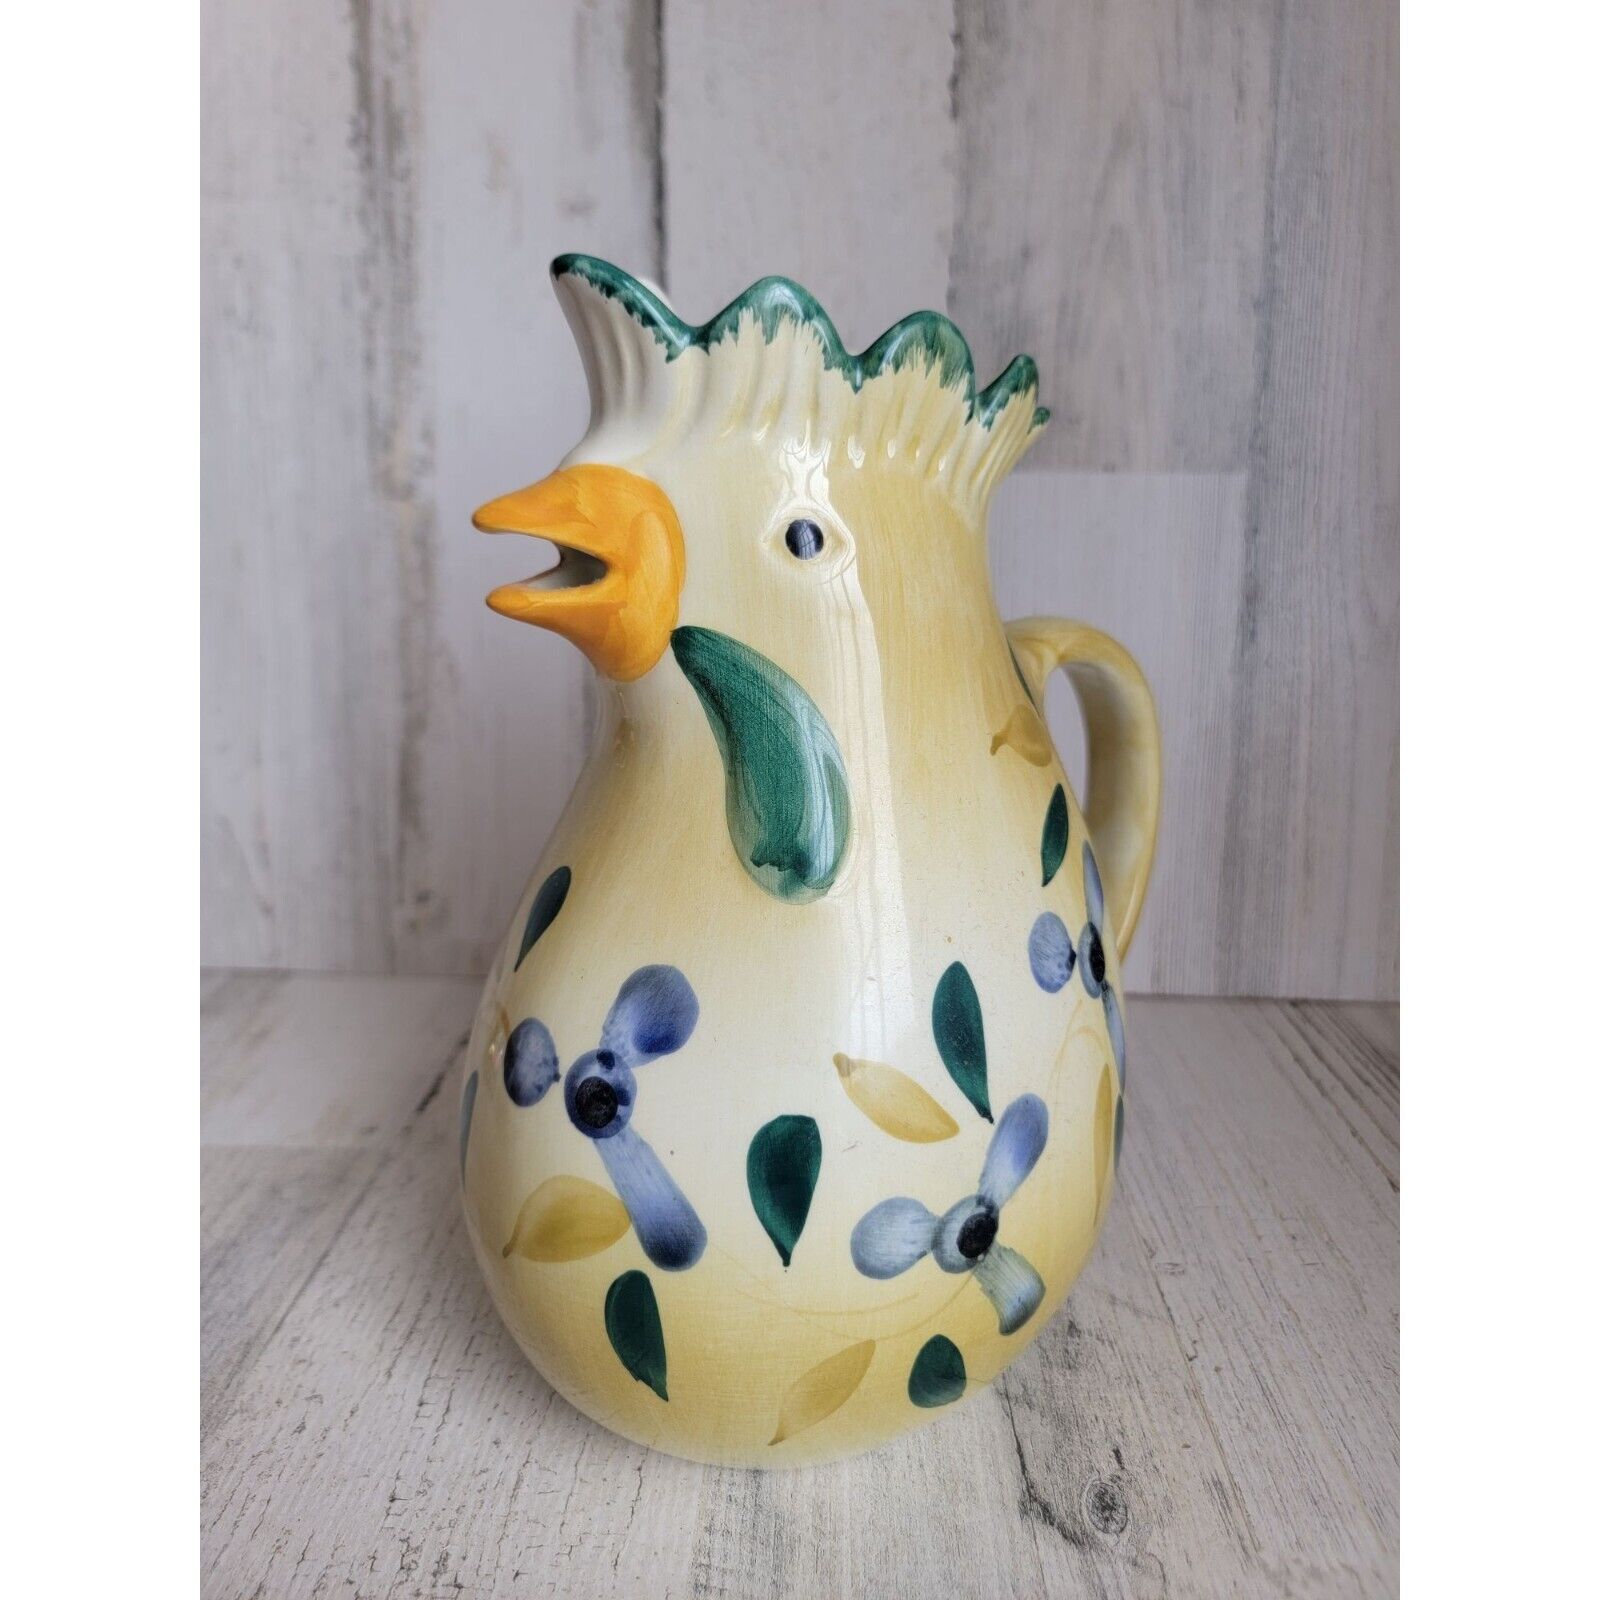 Vintage Italian Marketplace chick chicken vase pitcher